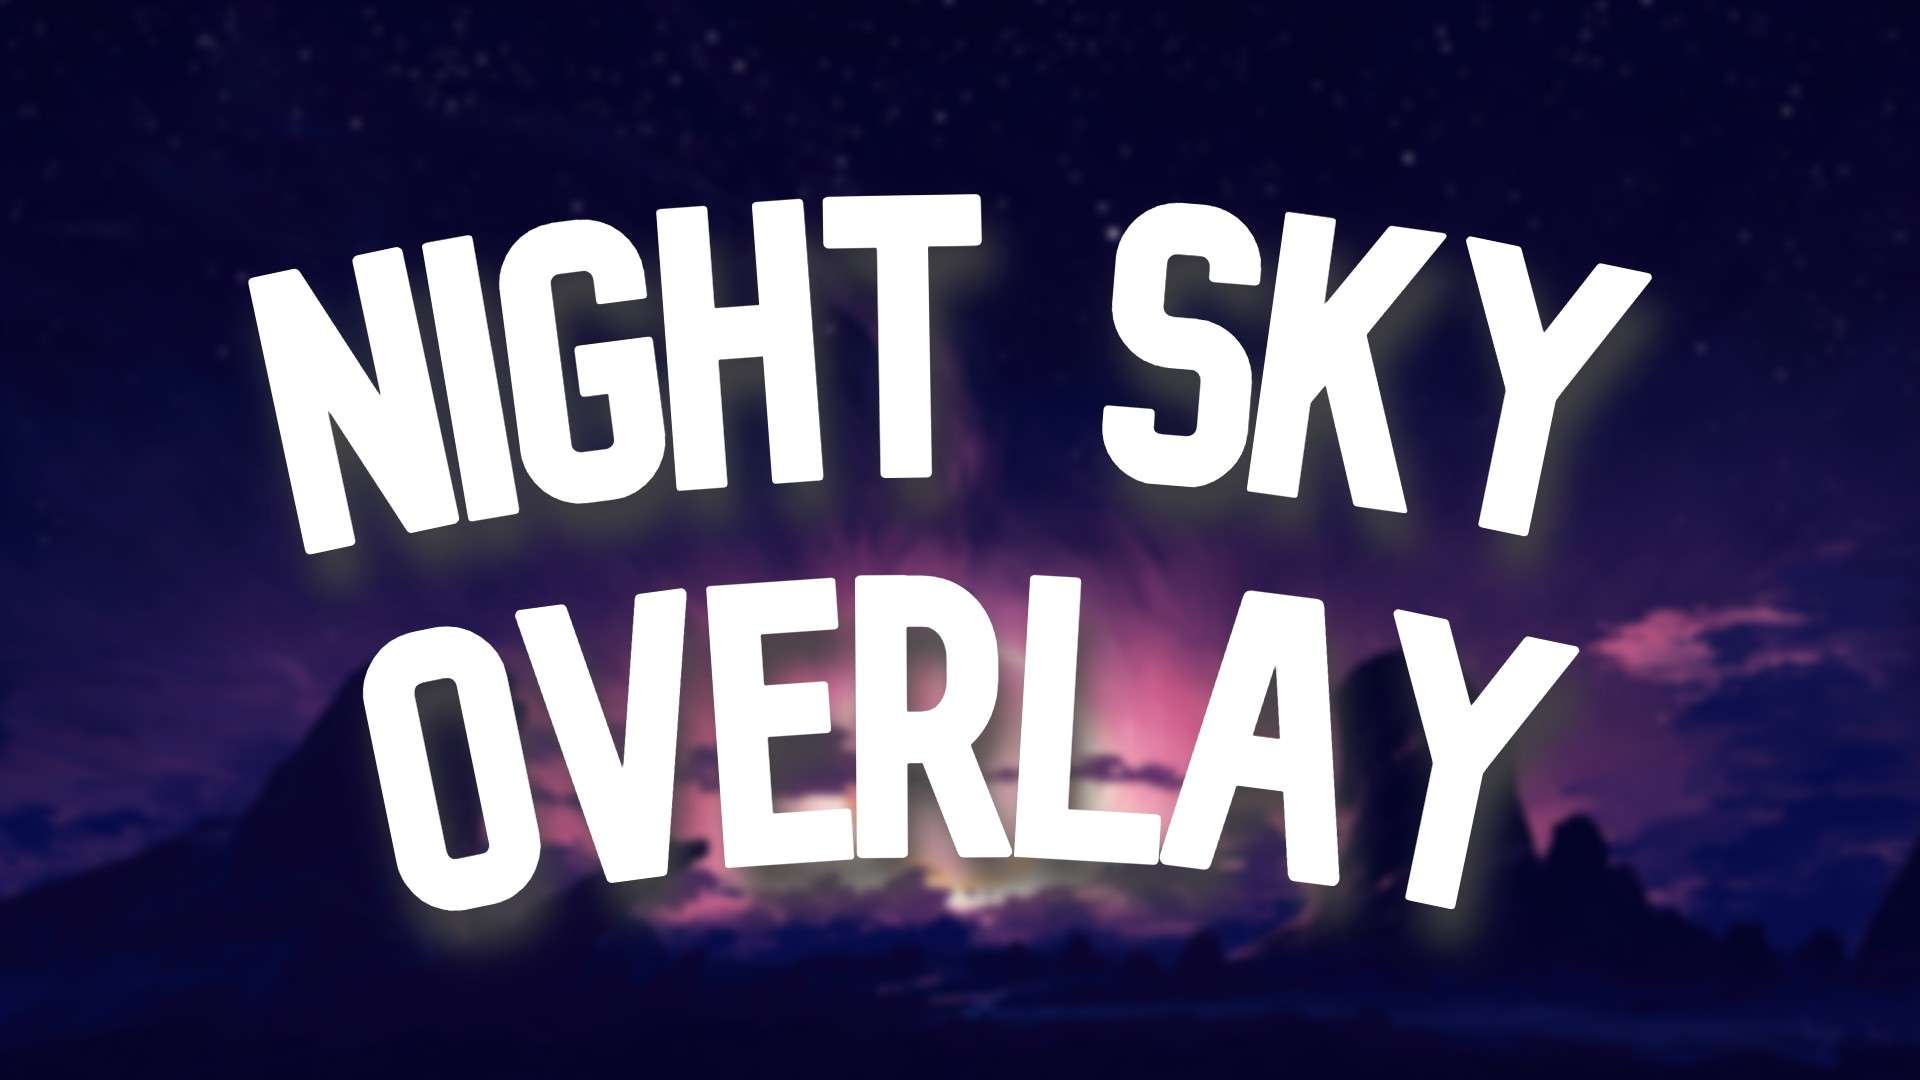 Night Sky Overlay #12 16x by rh56 on PvPRP